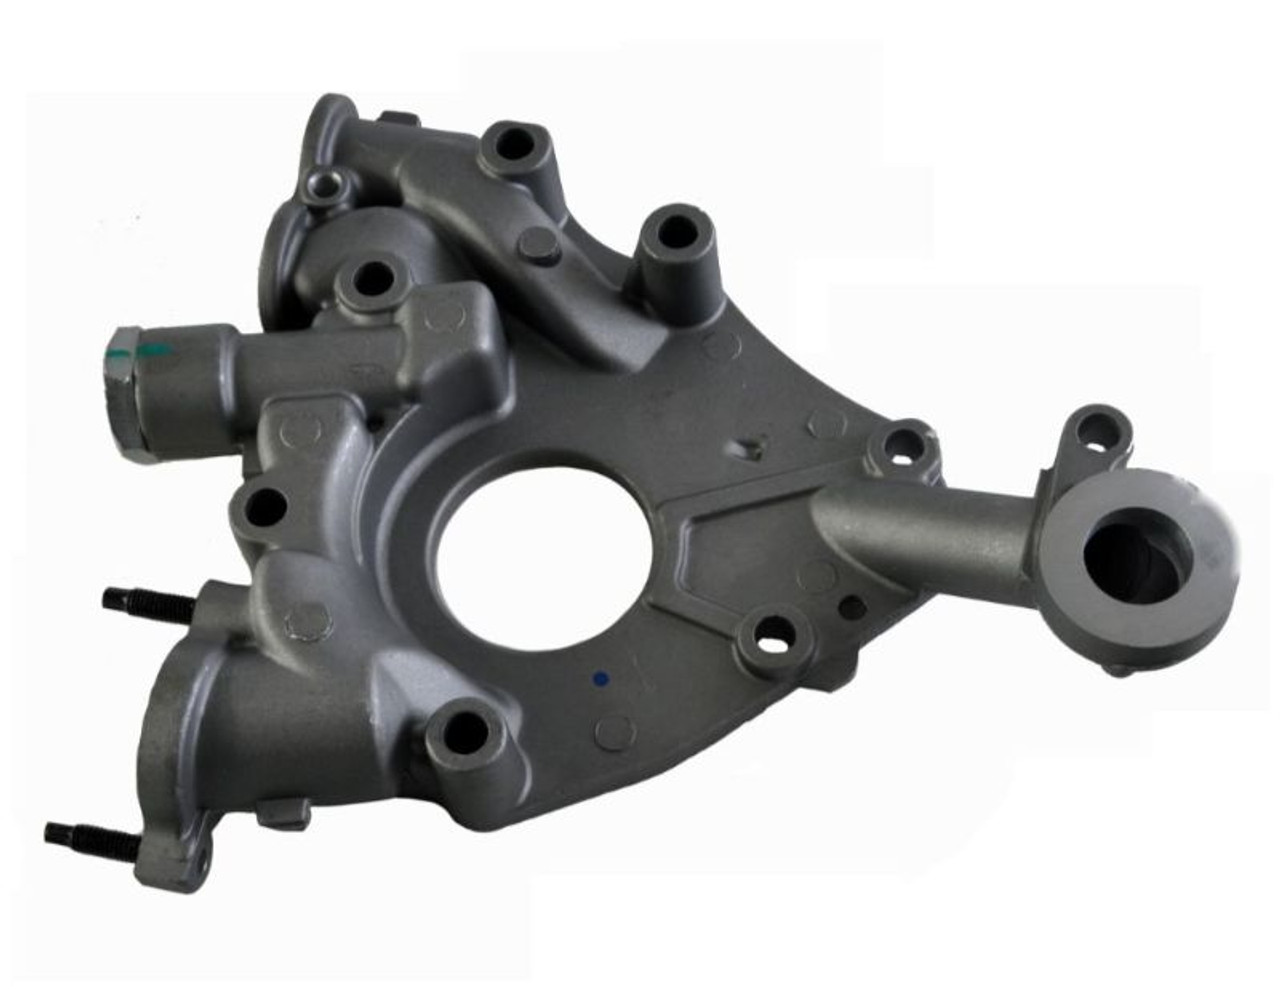 2015 Toyota Highlander 3.5L Engine Oil Pump EP490 -56